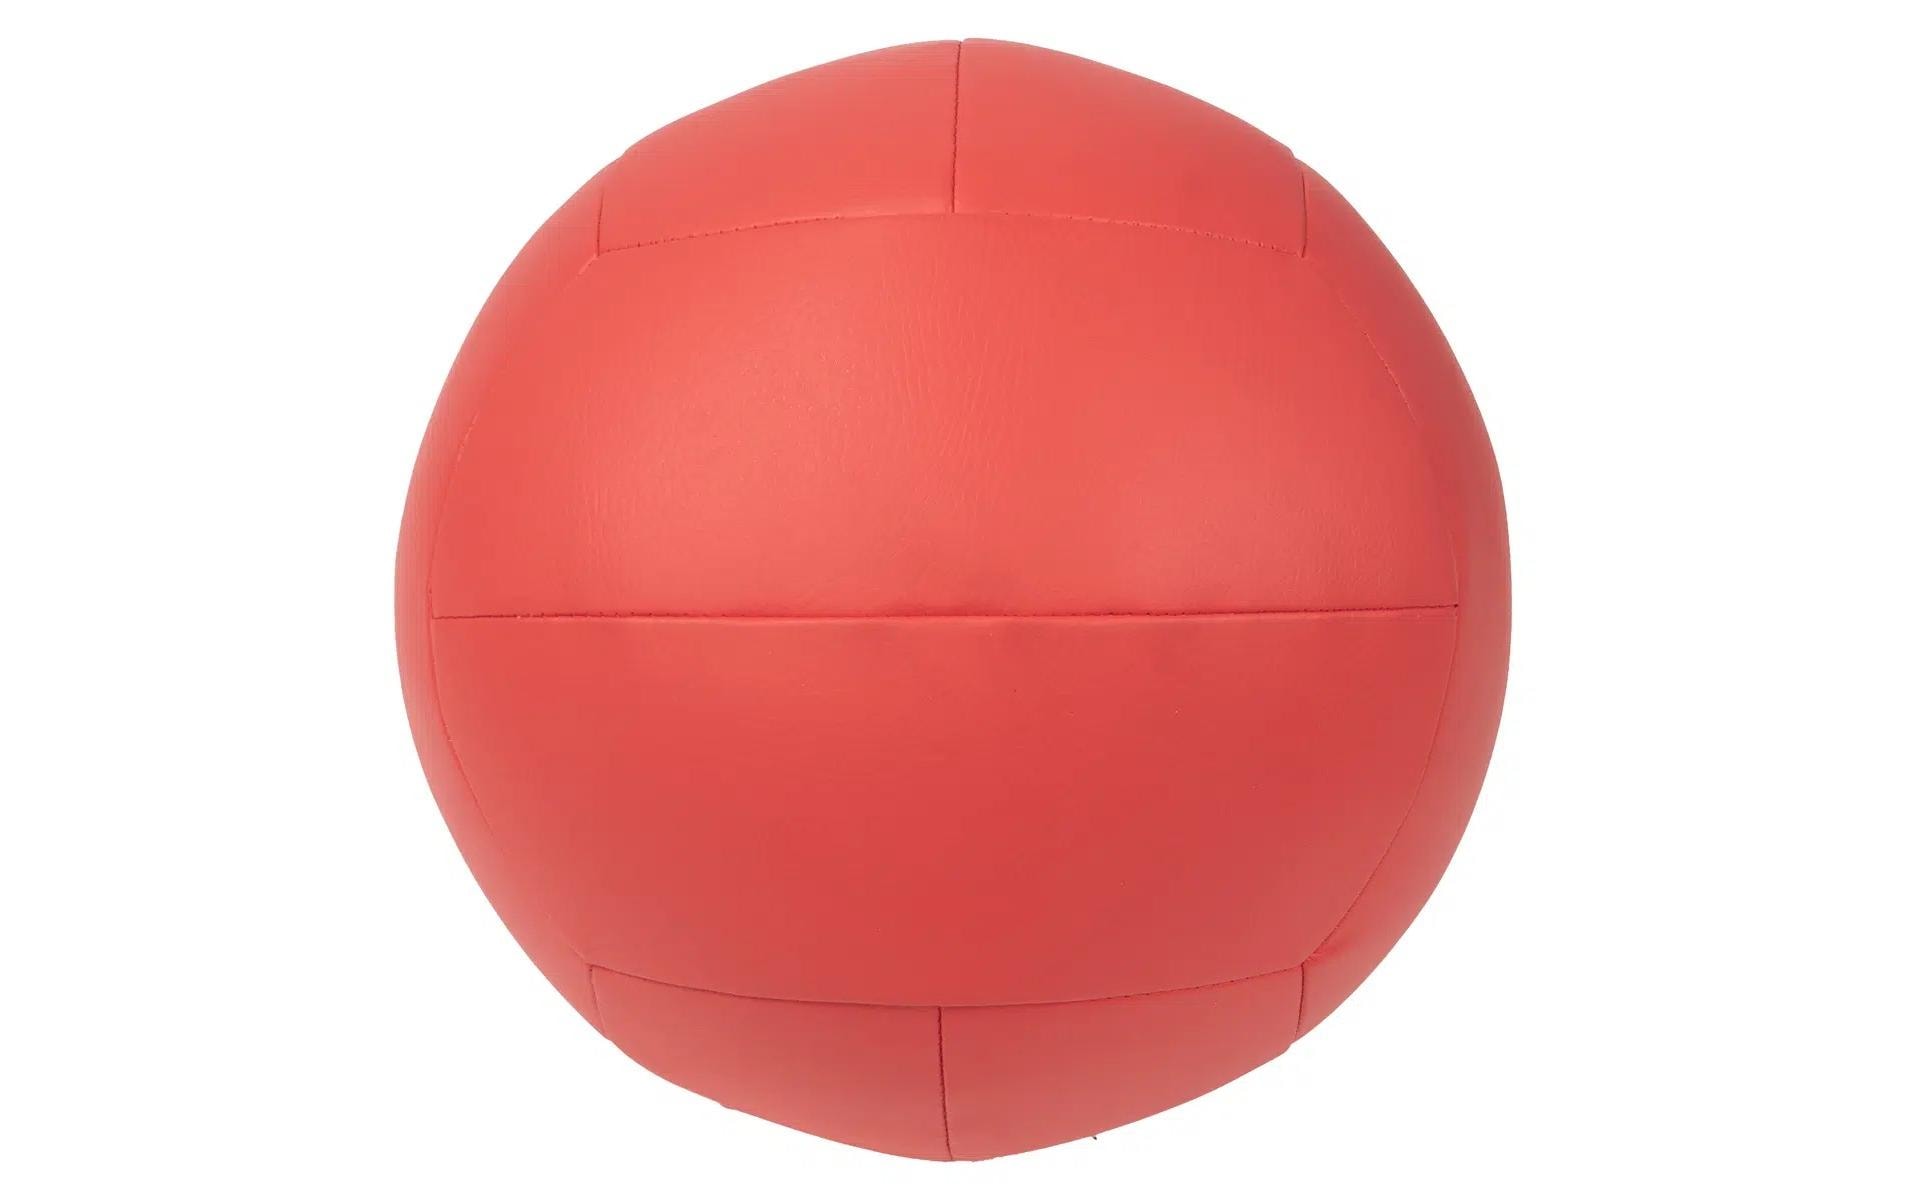 Gladiatorfit Medizinball Ultra-strapazierfähiger Wall Ball 12 kg